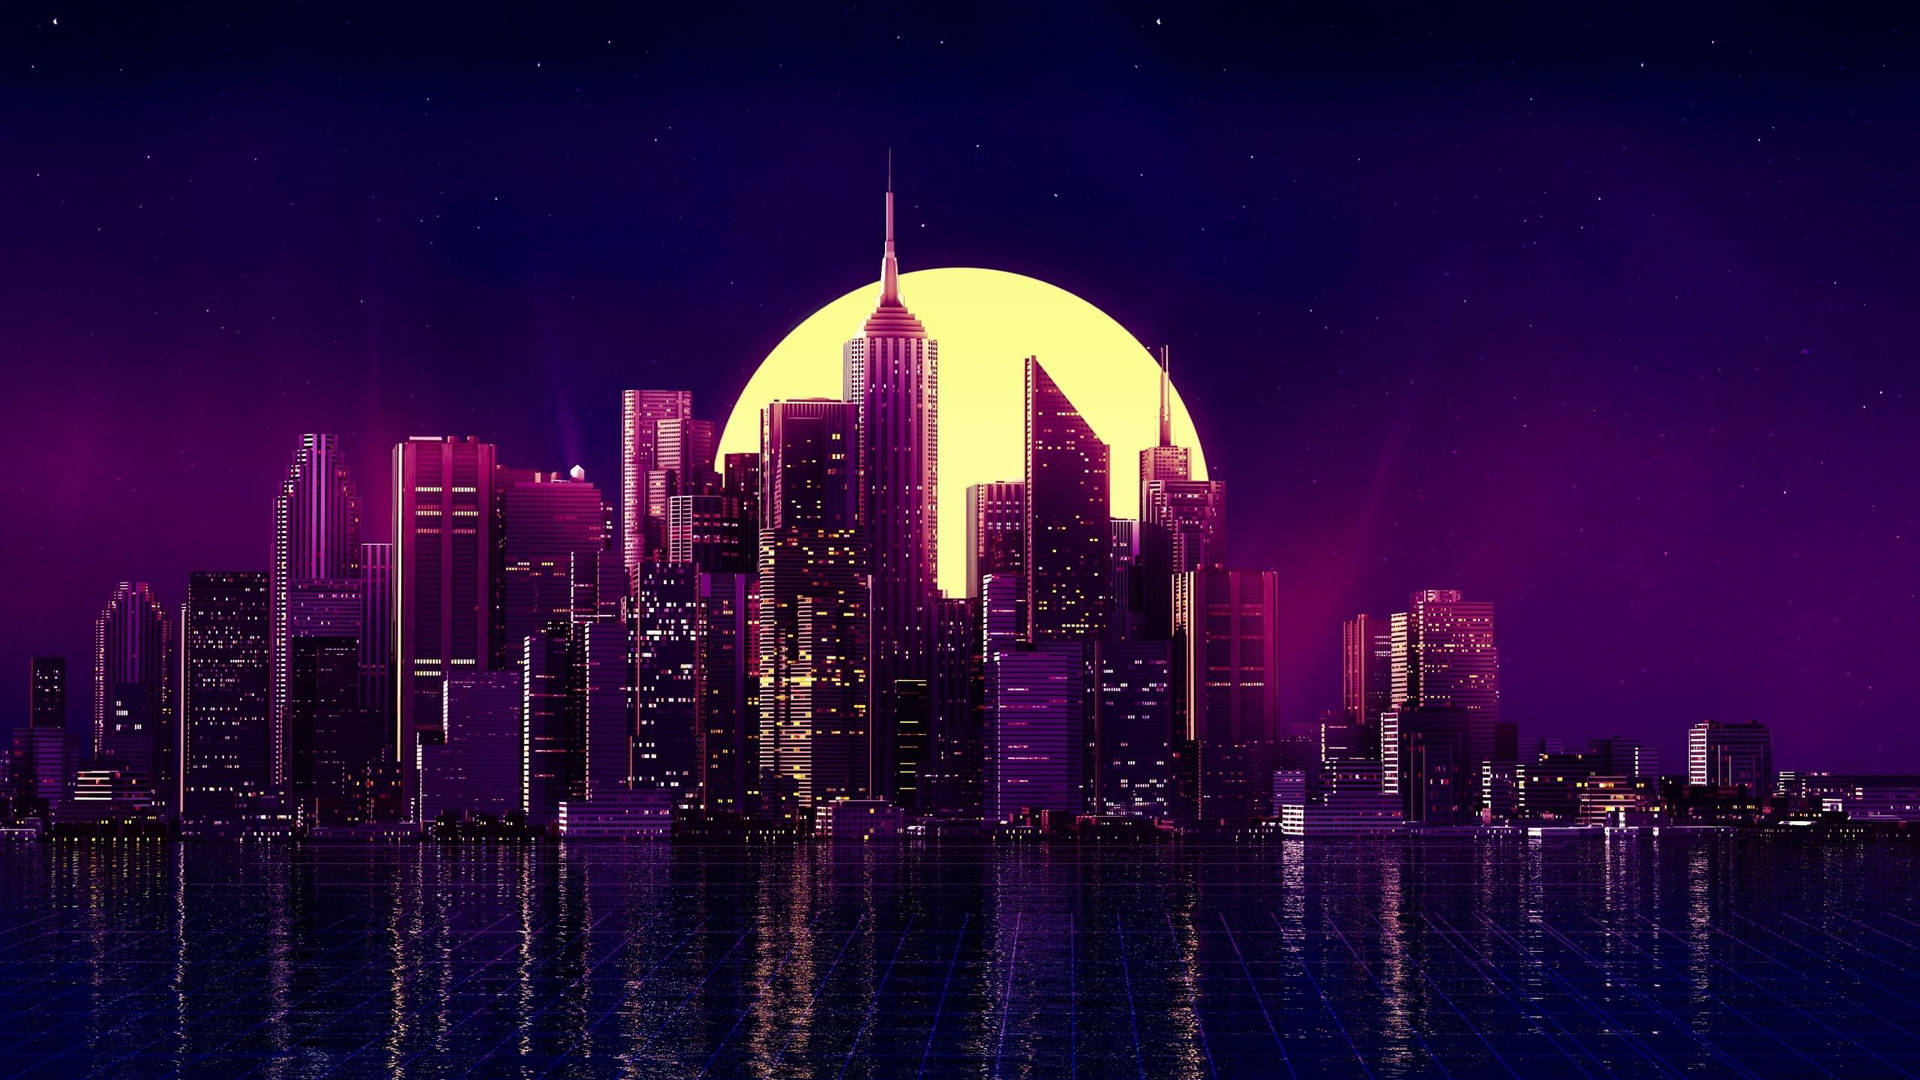 1440p Hd Purple Aesthetic City Moon Background